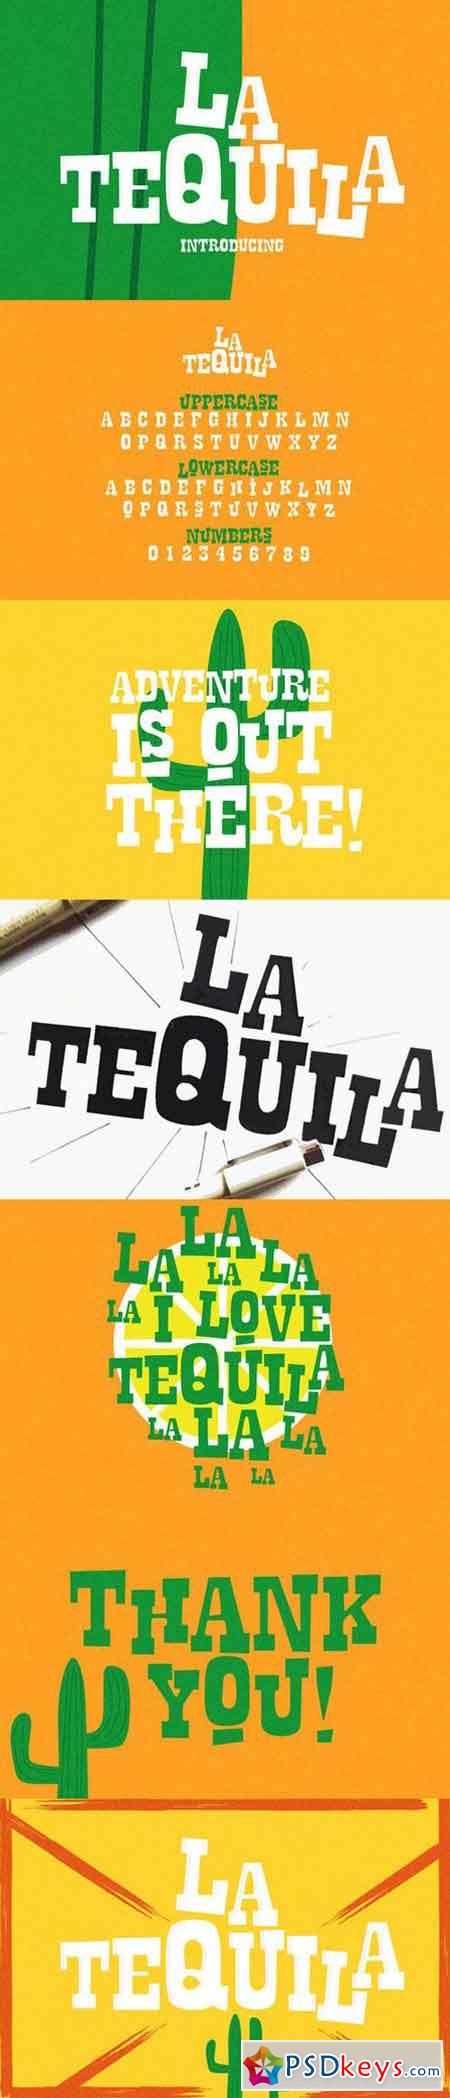 La Tequila Typeface 719731